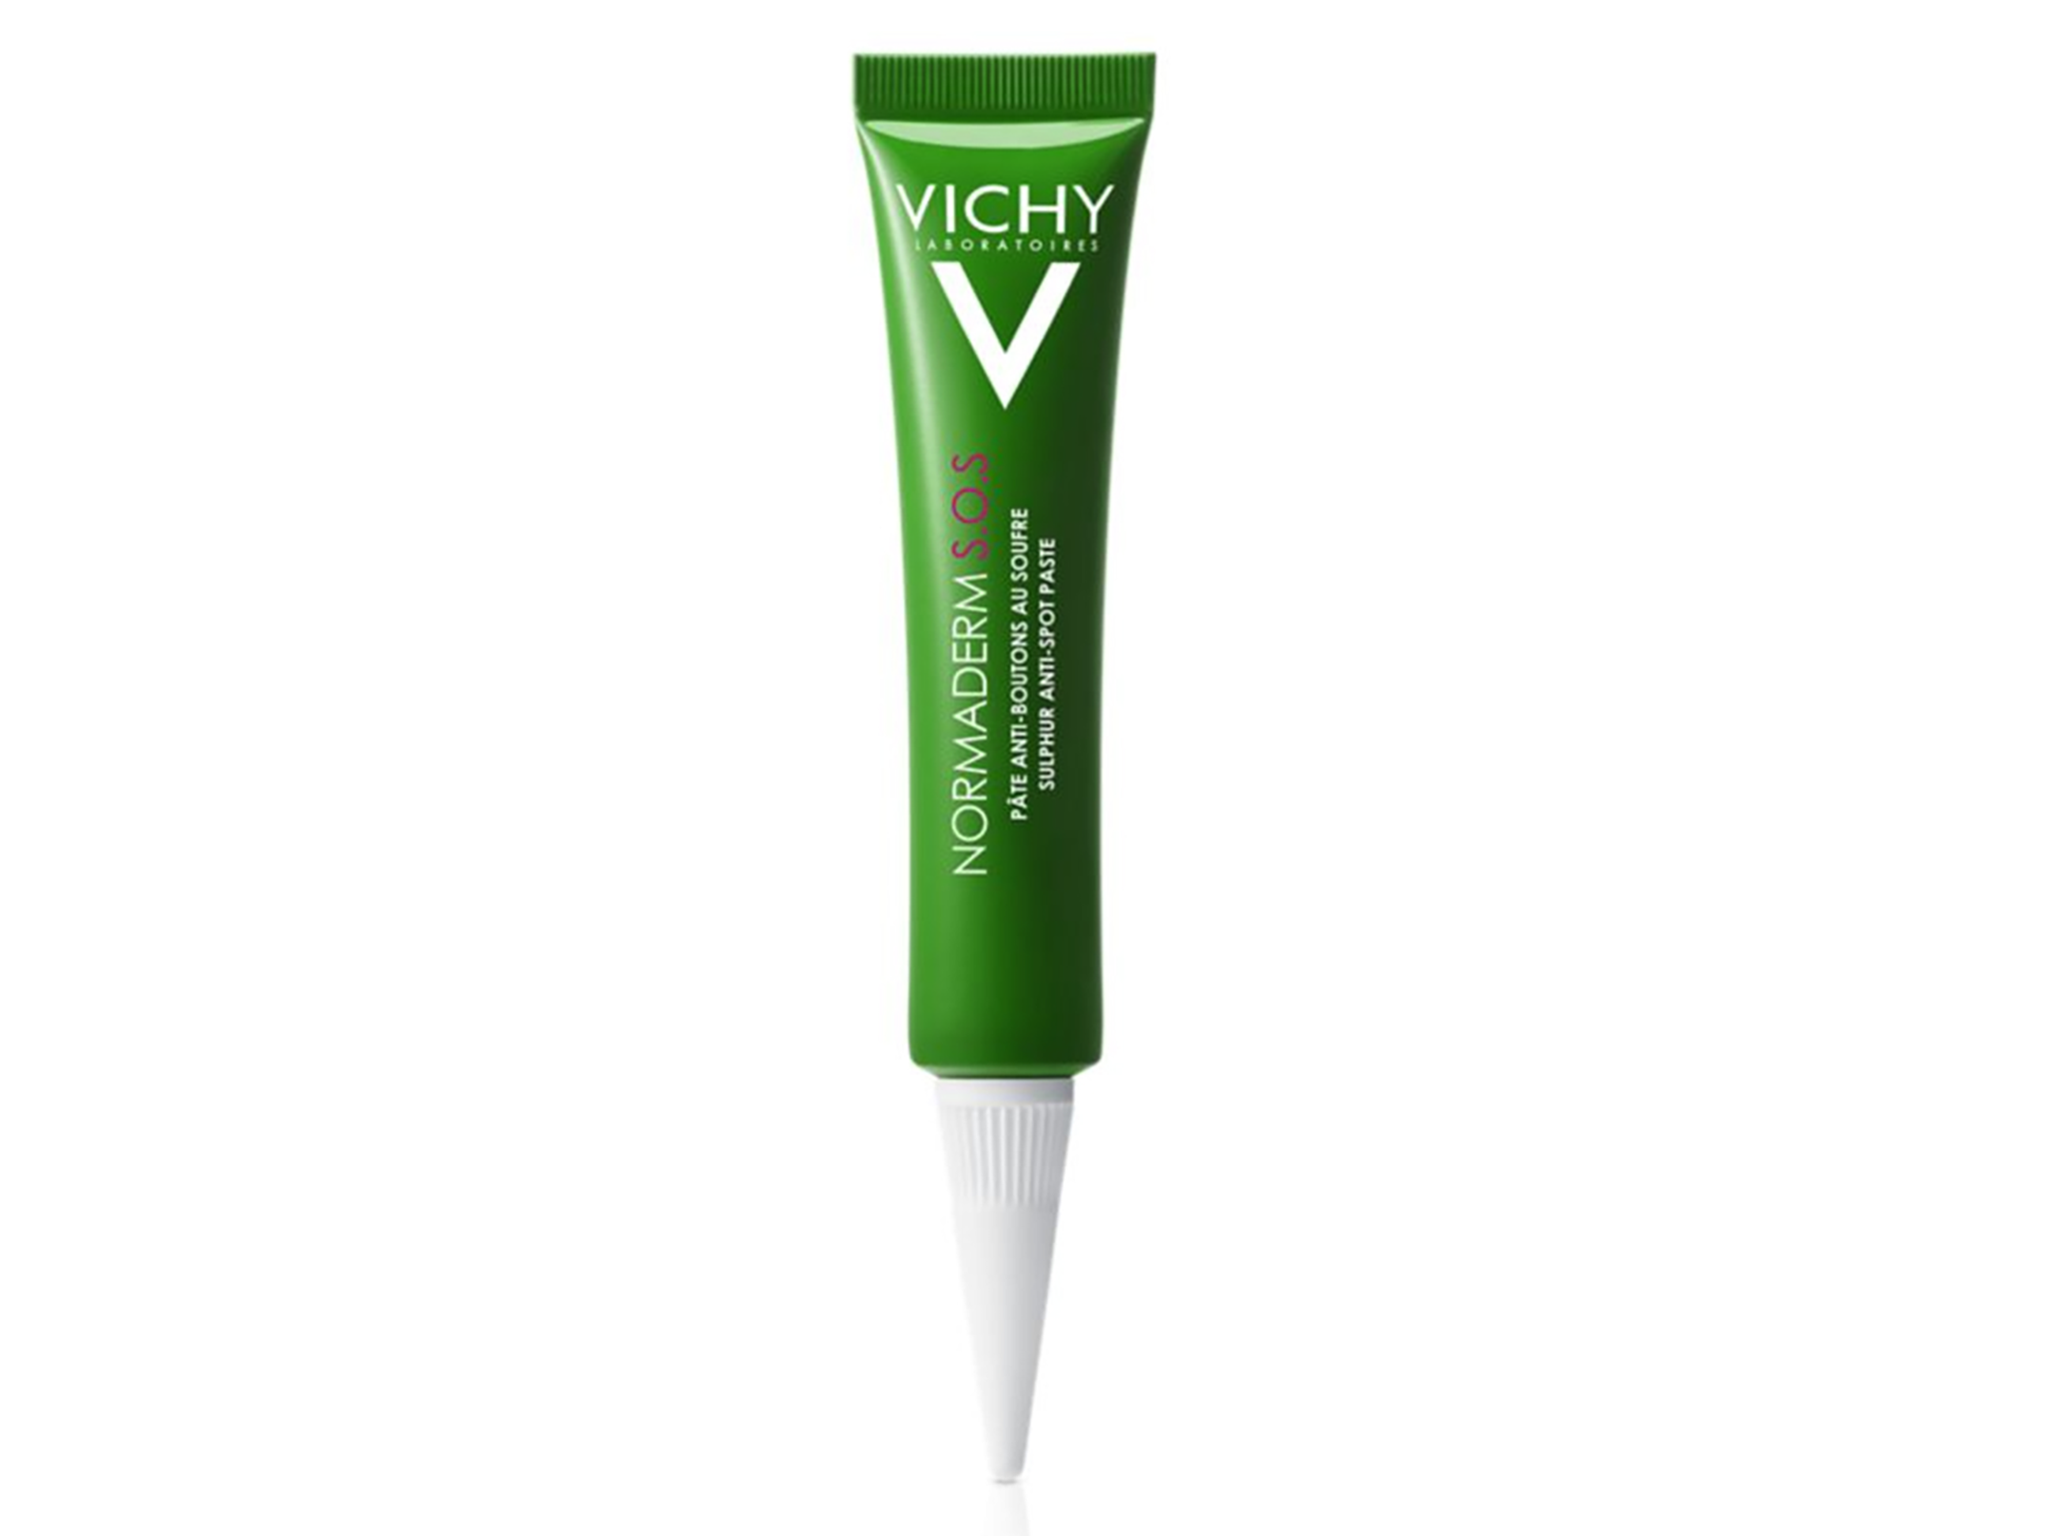 Vichy Normaderm SOS anti-blemish sulphur paste